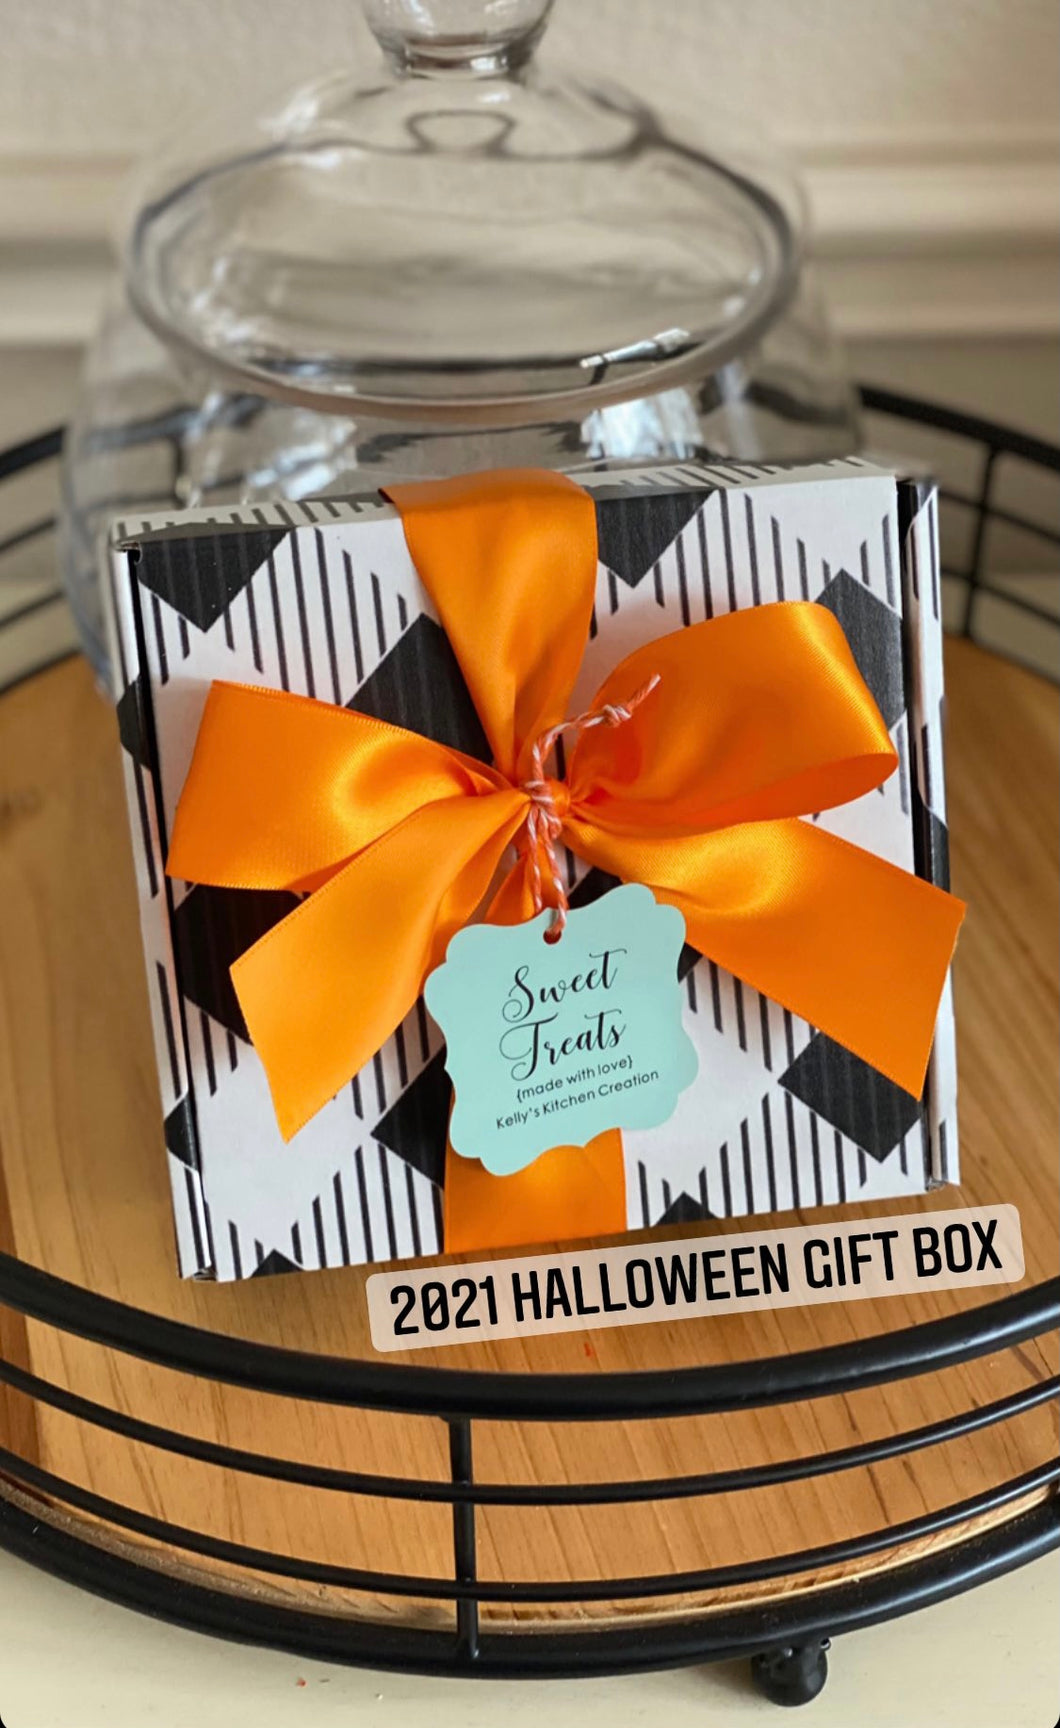 2021 Halloween Gift Box